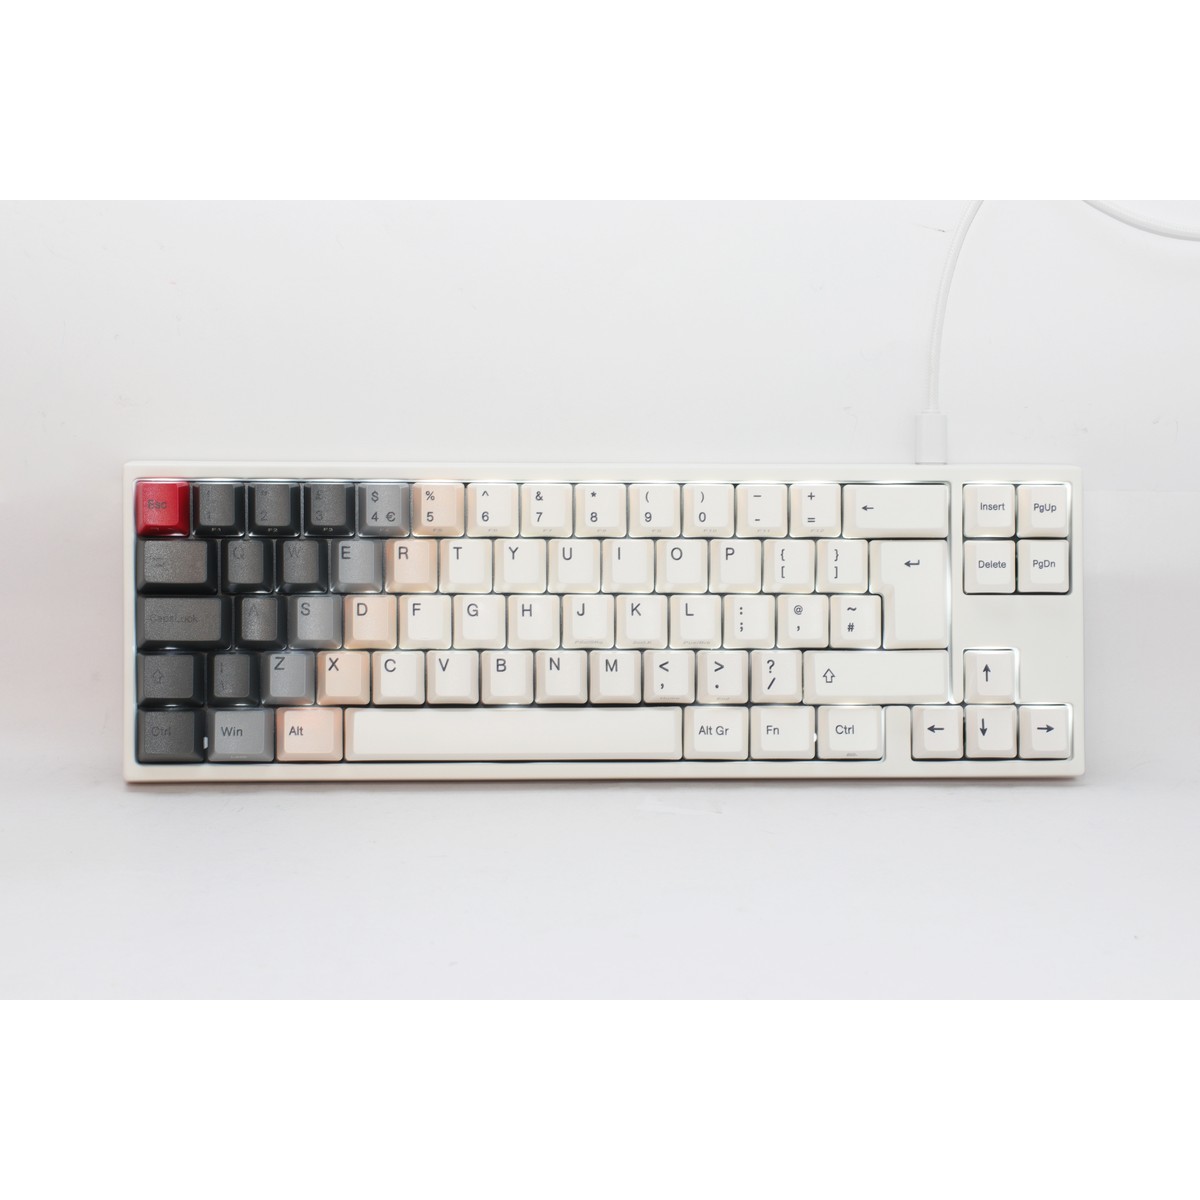 Ducky x Varmilo MIYA 69 Pro Holy Flame Mechanical Gaming Keyboard Cherry MX Red Backlit White - White/Grey/Red